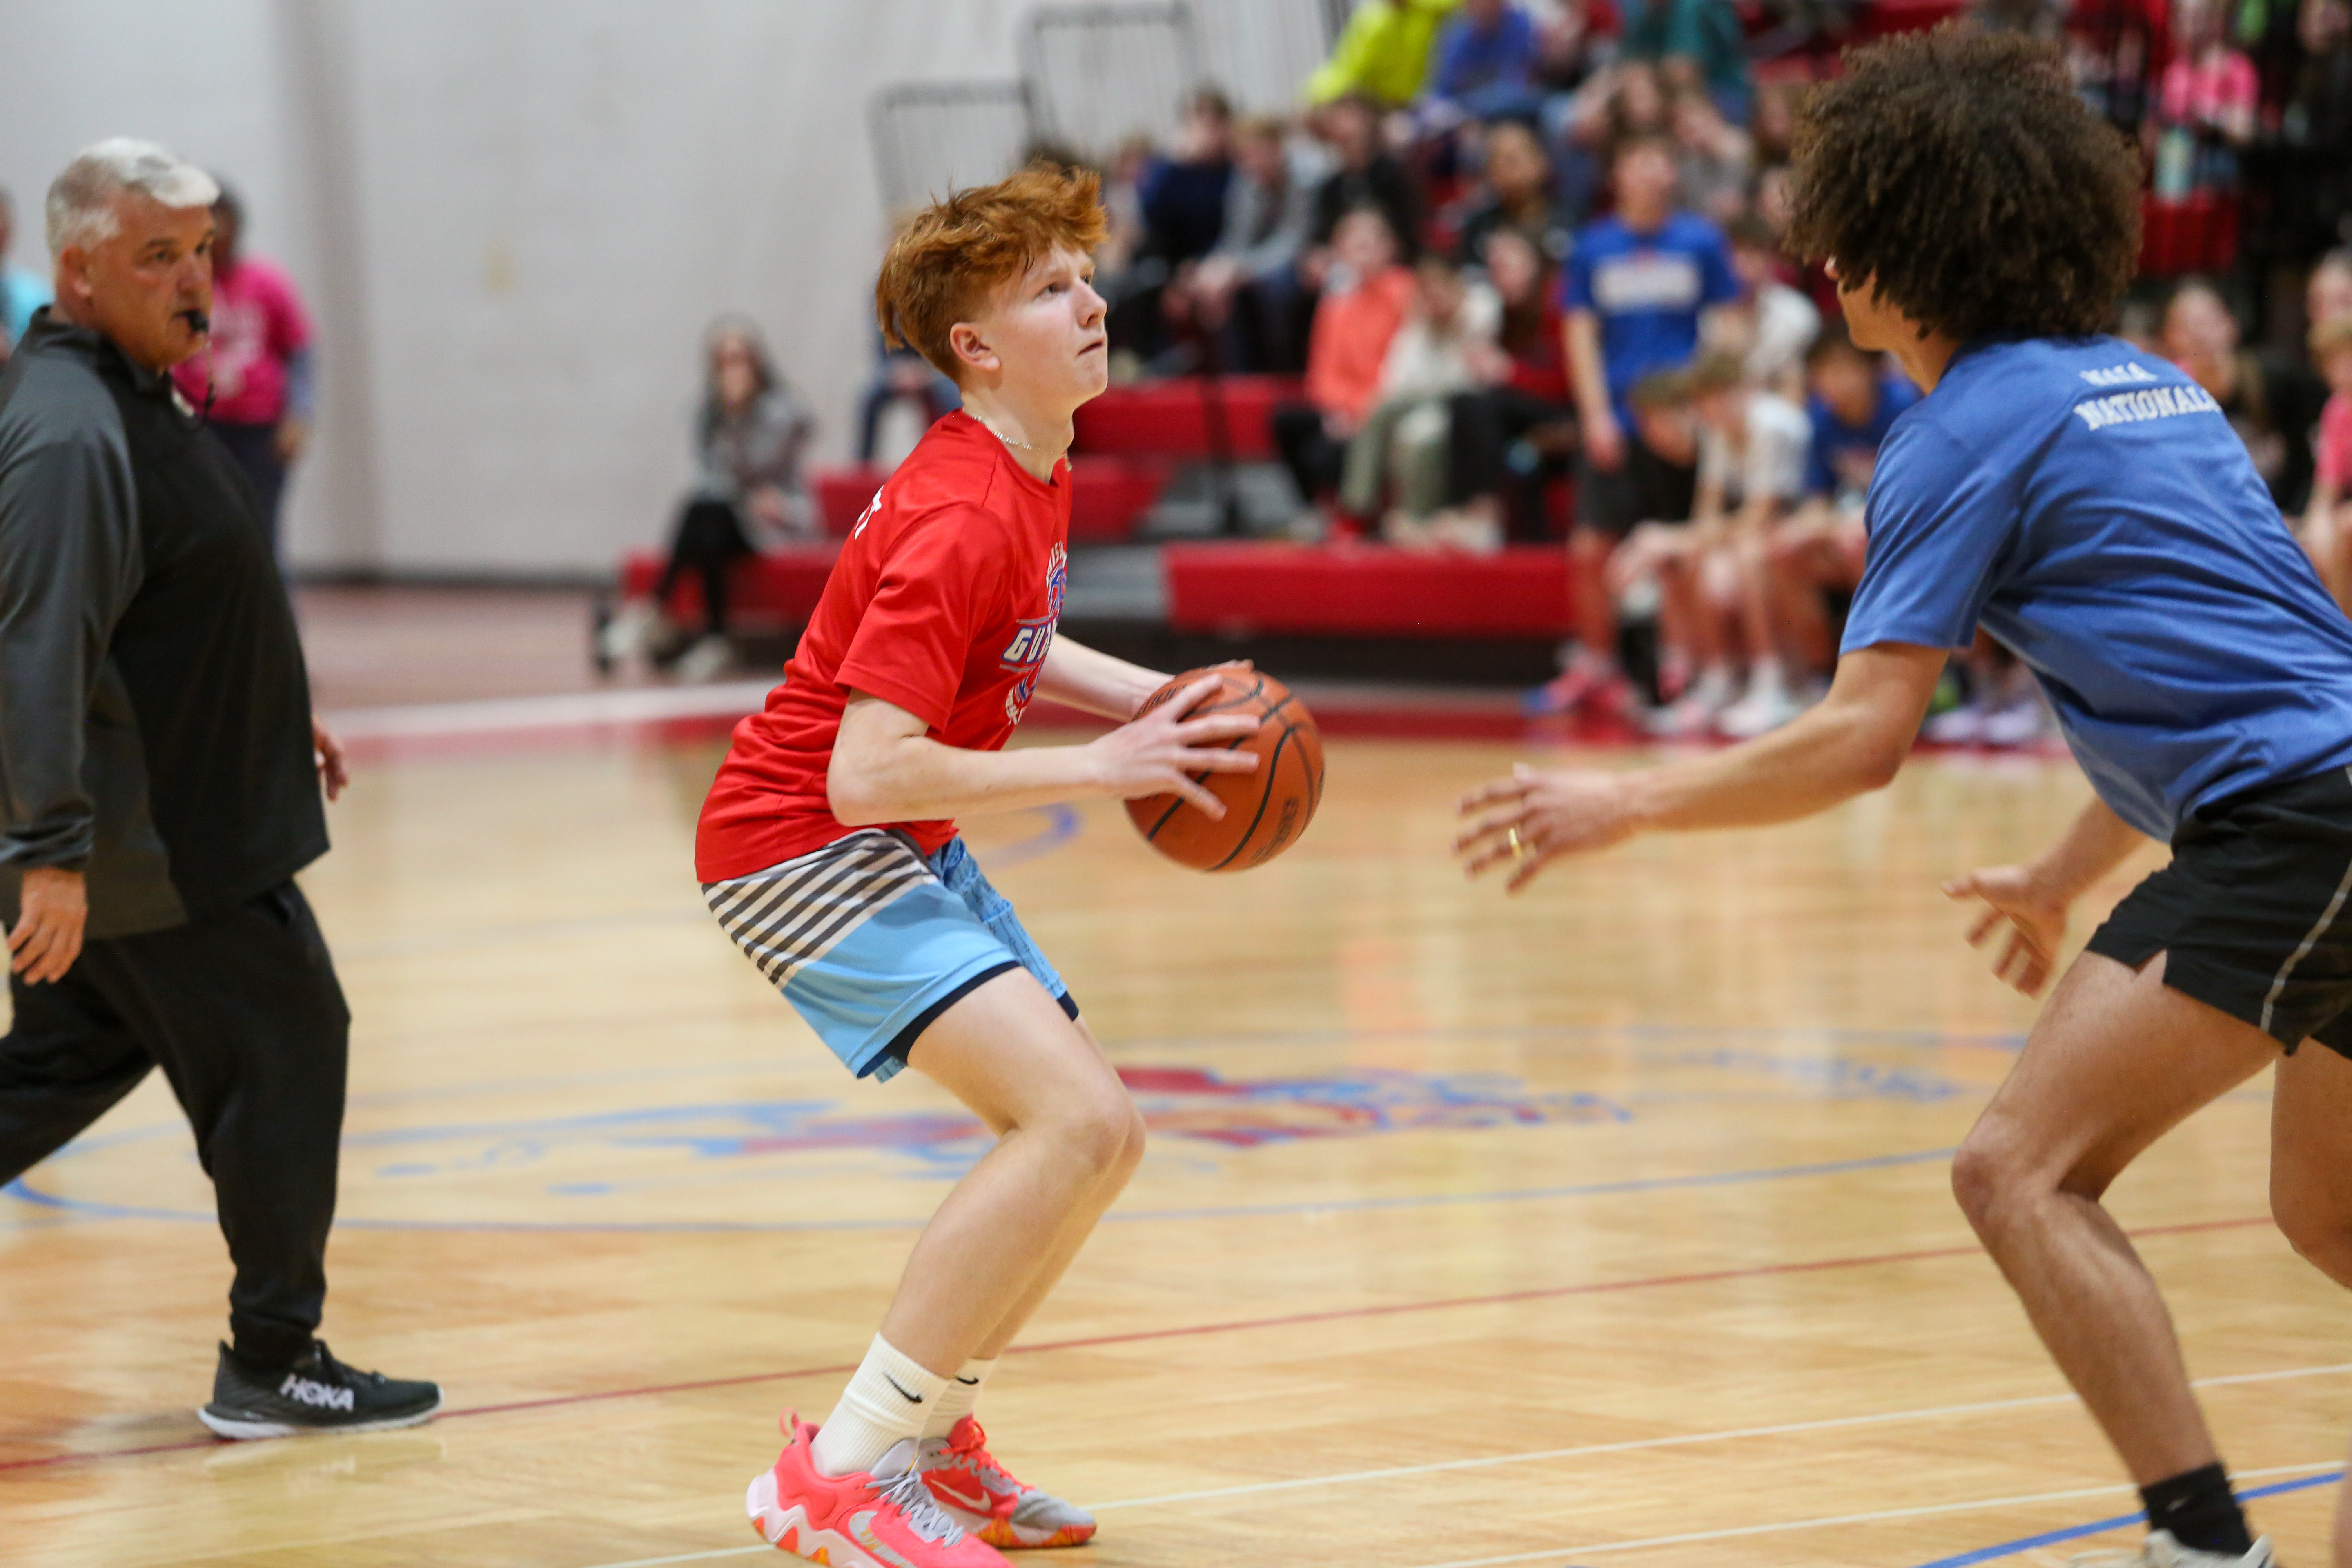 Grissom Student holding basketball